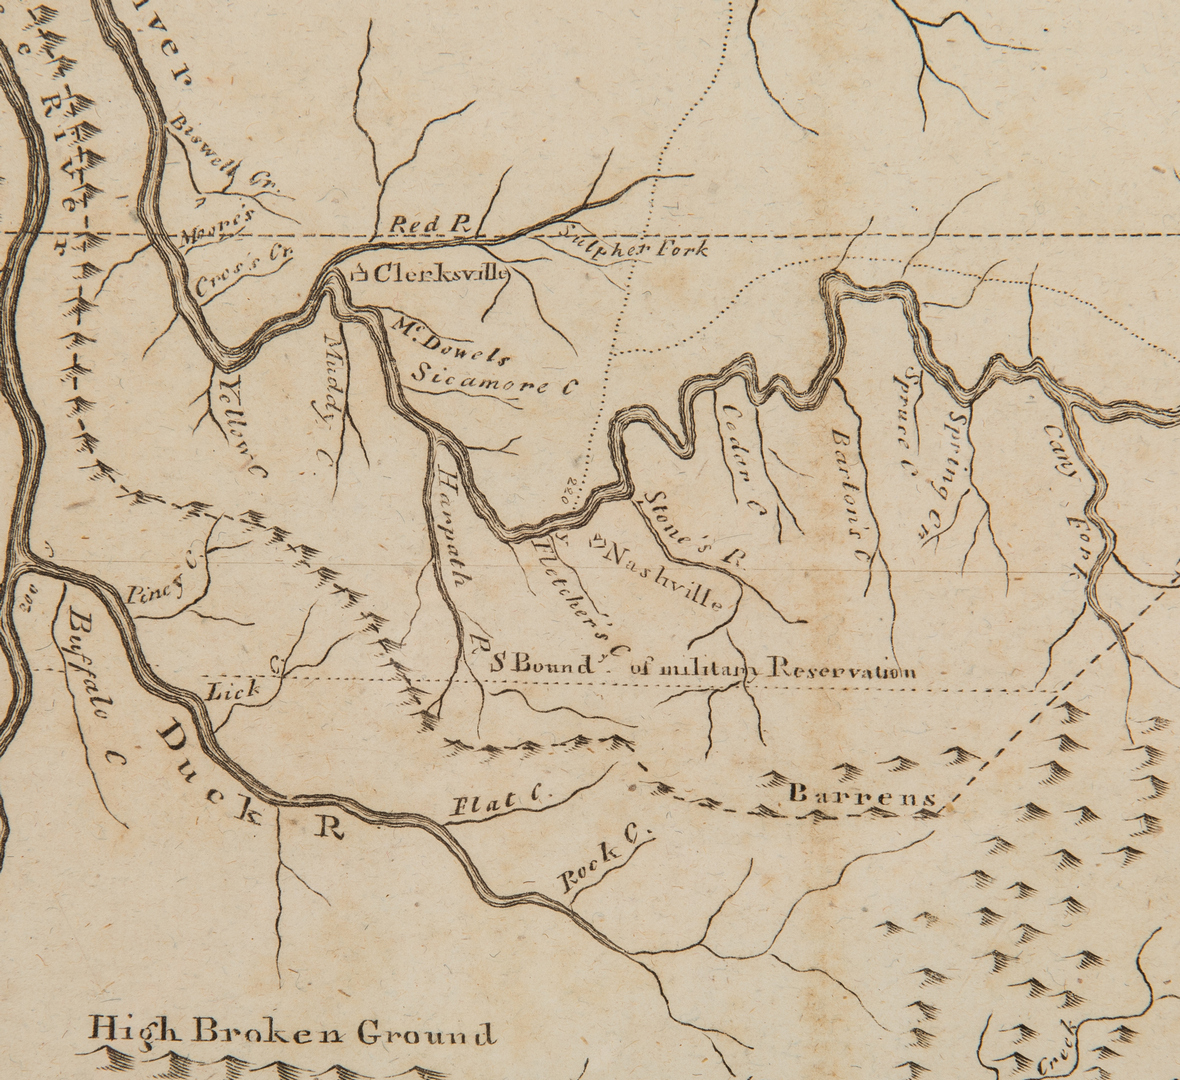 Lot 631: Tennassee E. Low / Payne Map 1810